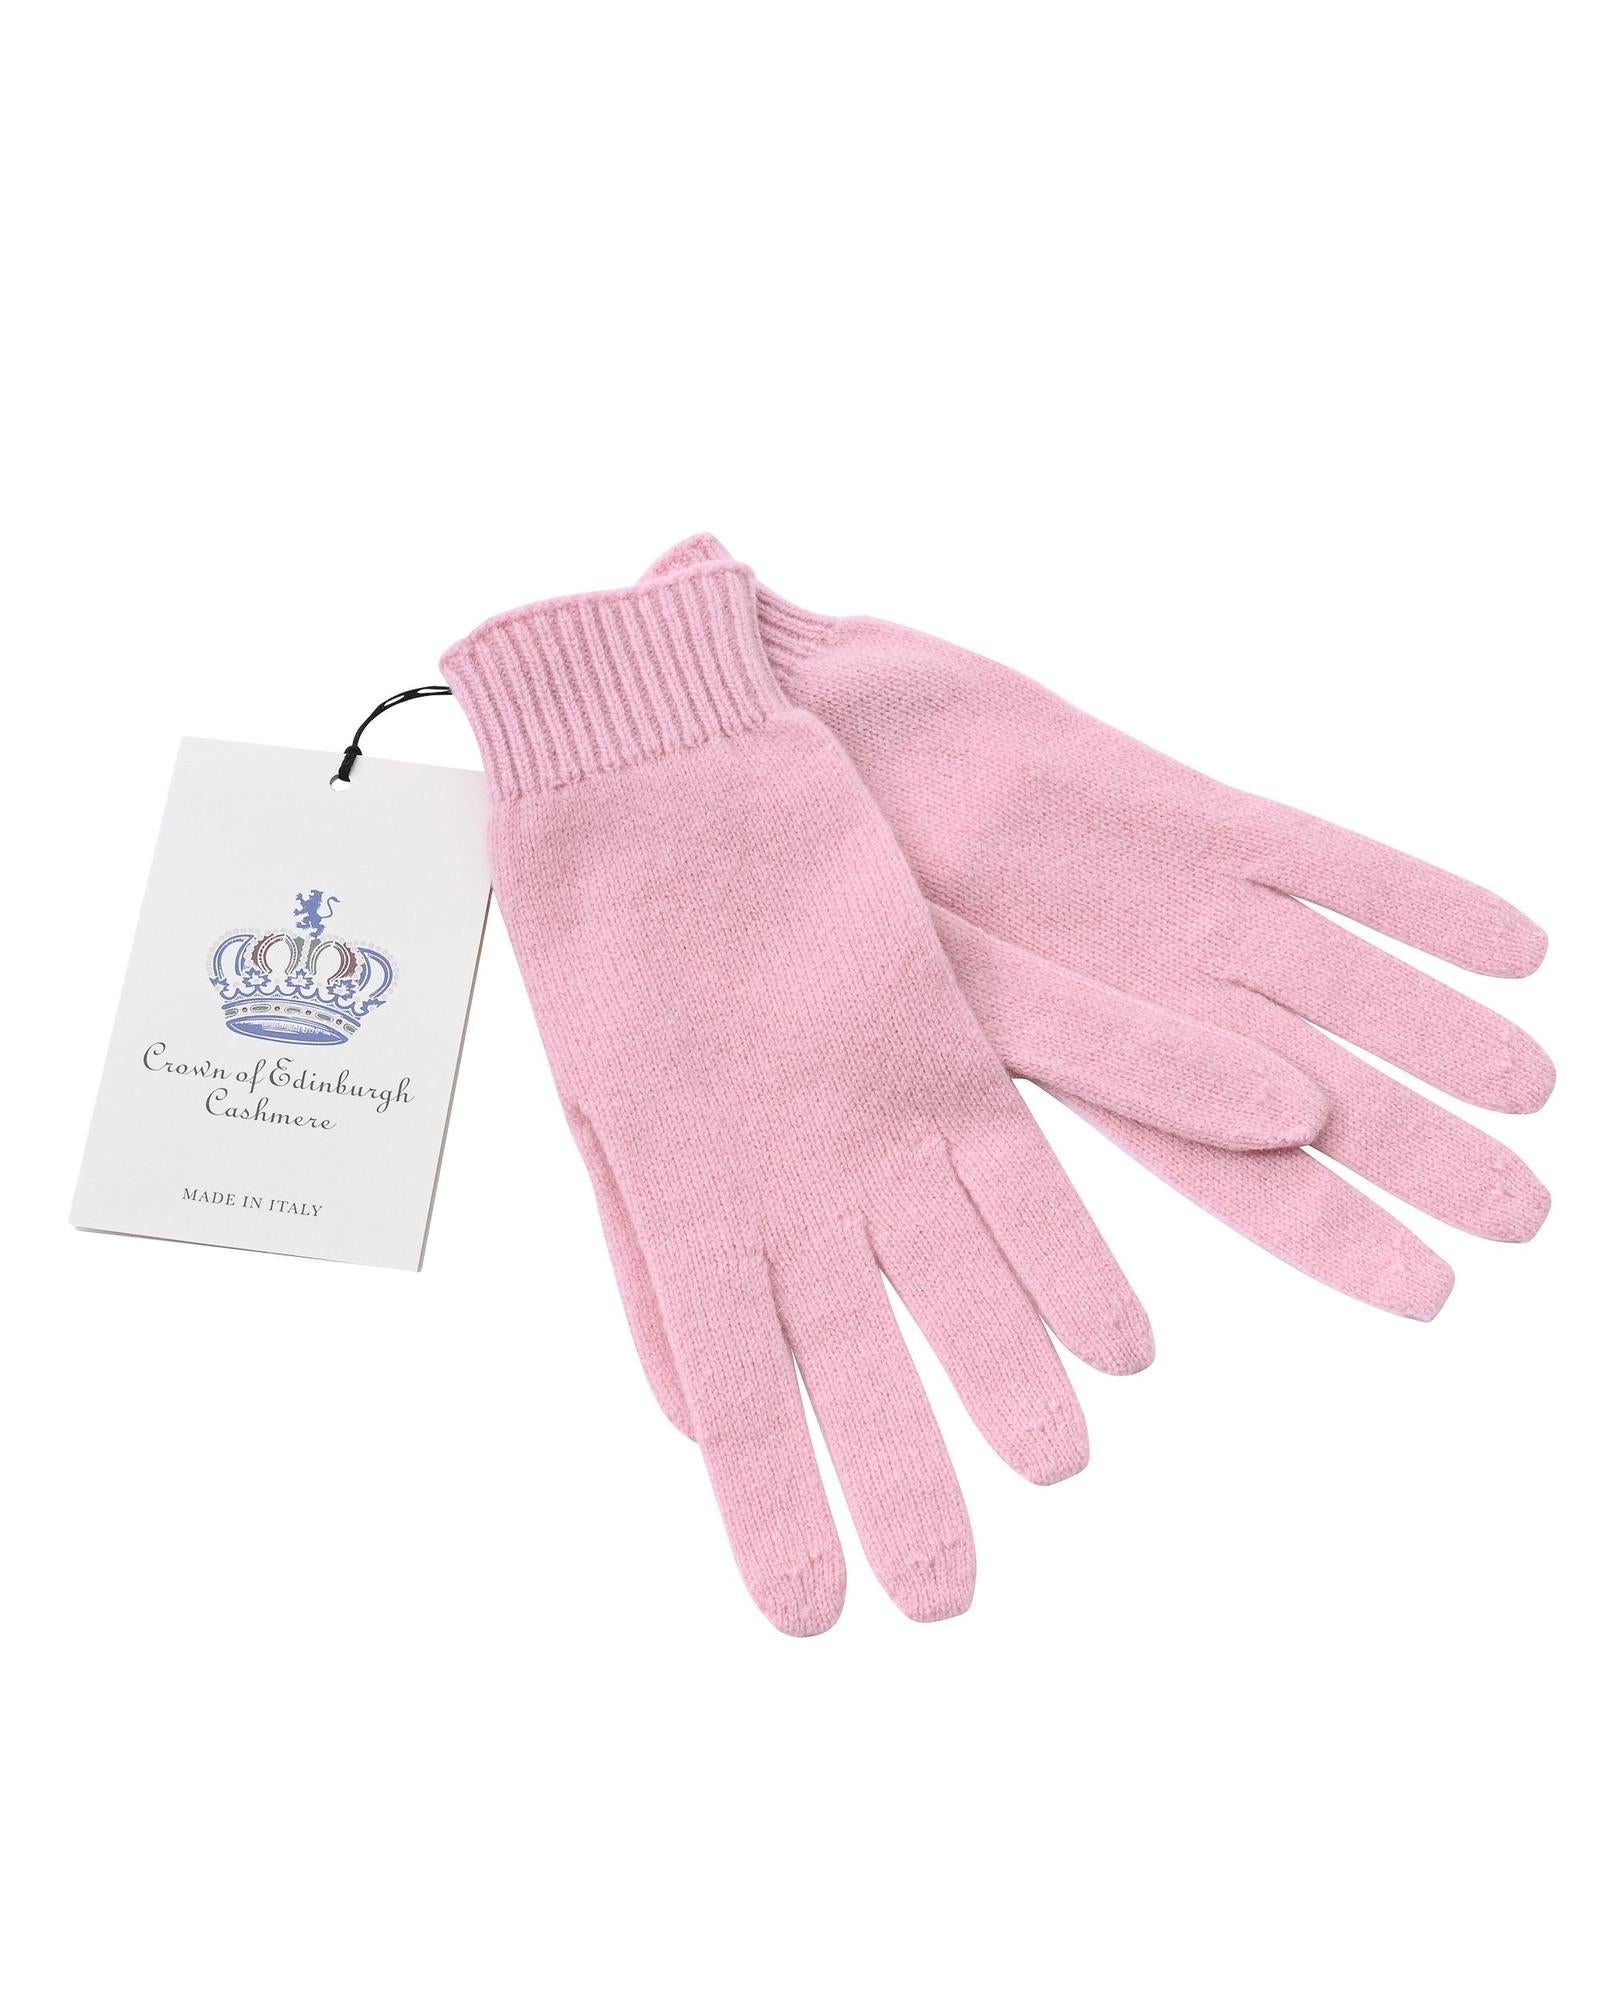 Crown of Edinburgh Cashmere Women's Luxury Cashmere Womens Short Gloves in Rosa Baby - M